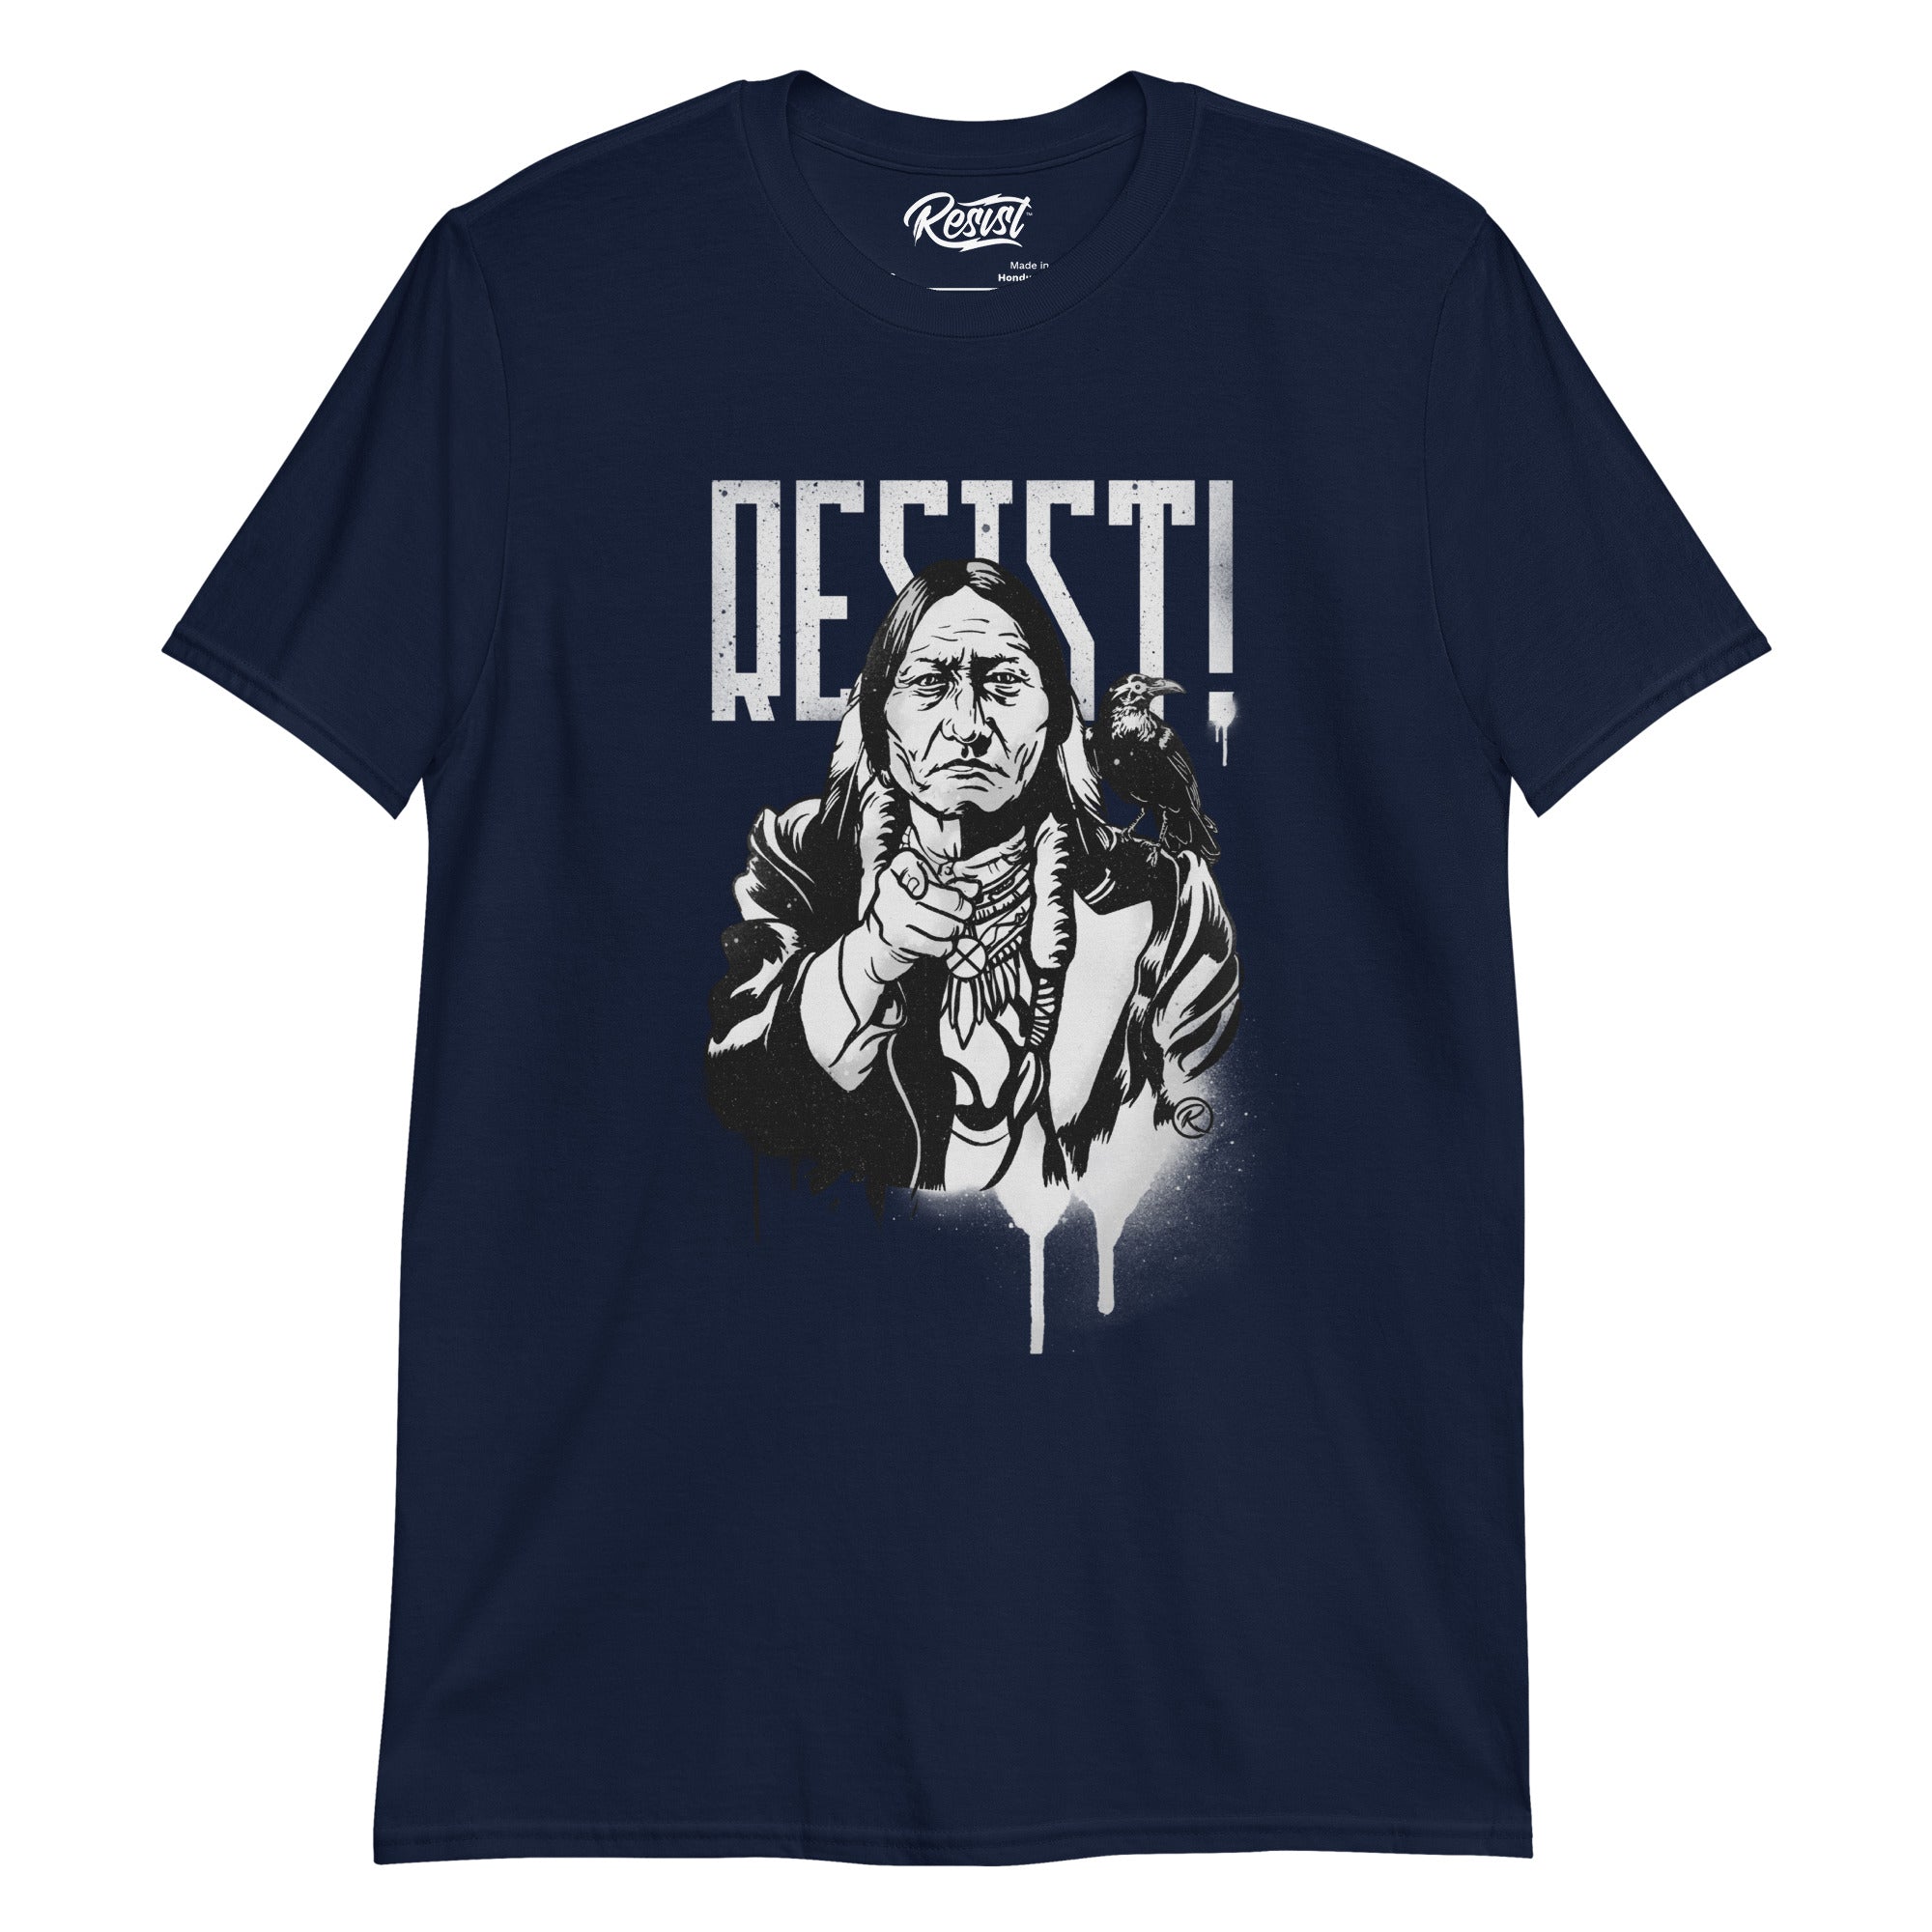 Sitting Bull RESIST T-Shirt